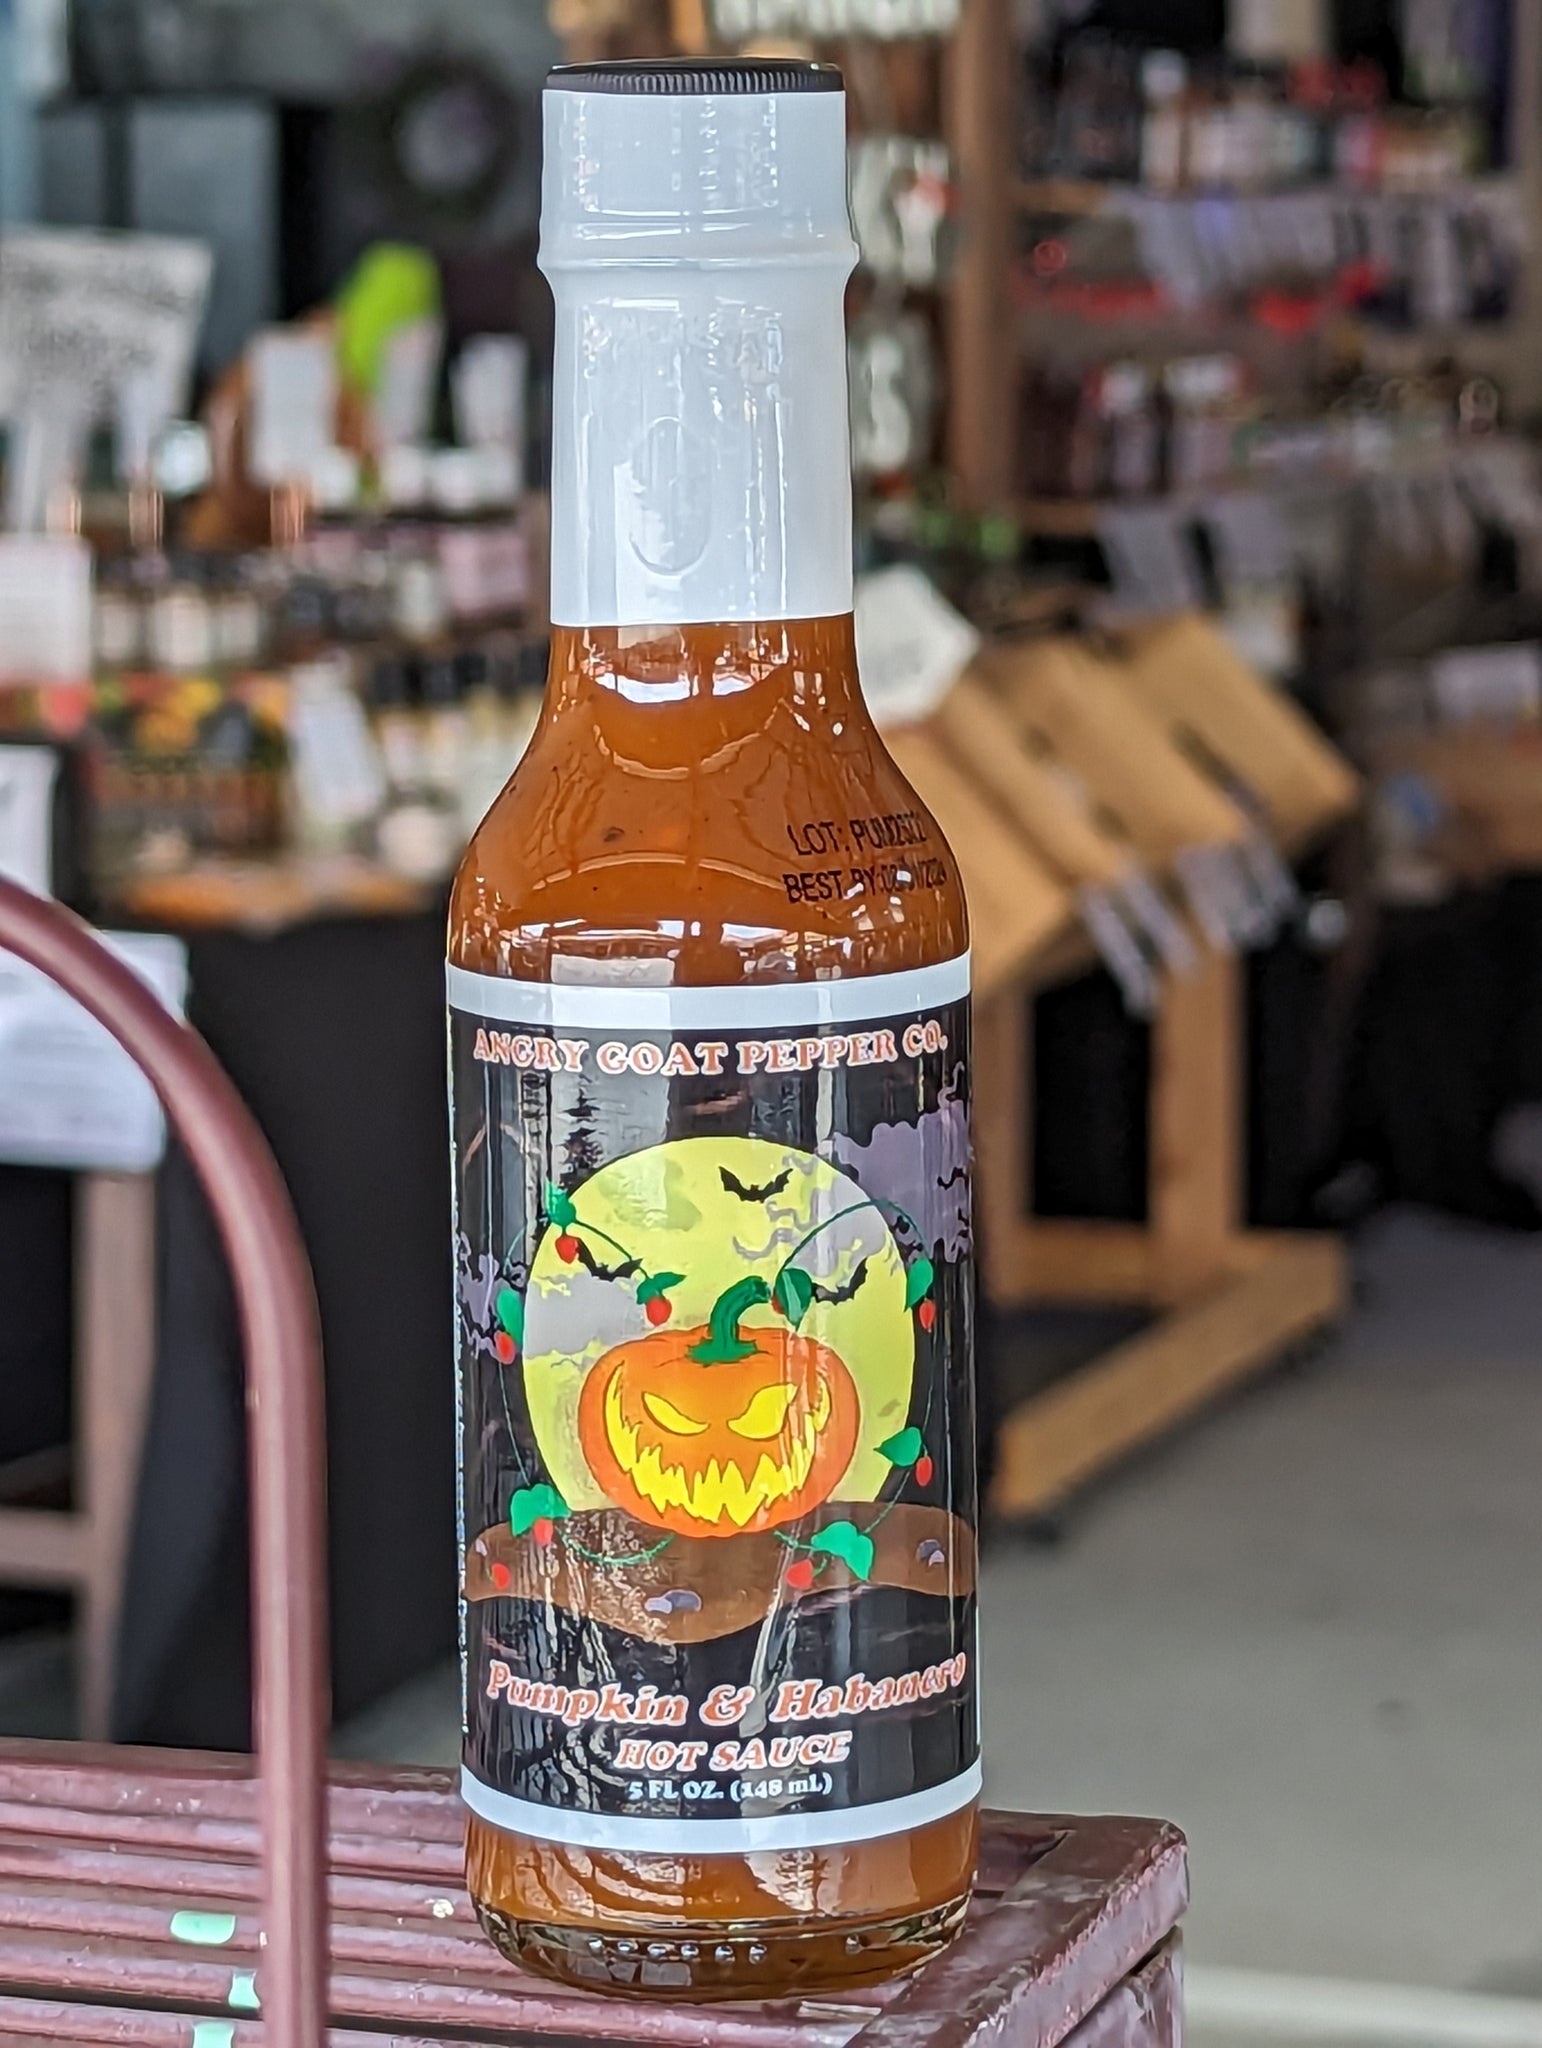 AGPC - Pumpkin & Habanero Hot Sauce – Angry Goat Pepper Co.